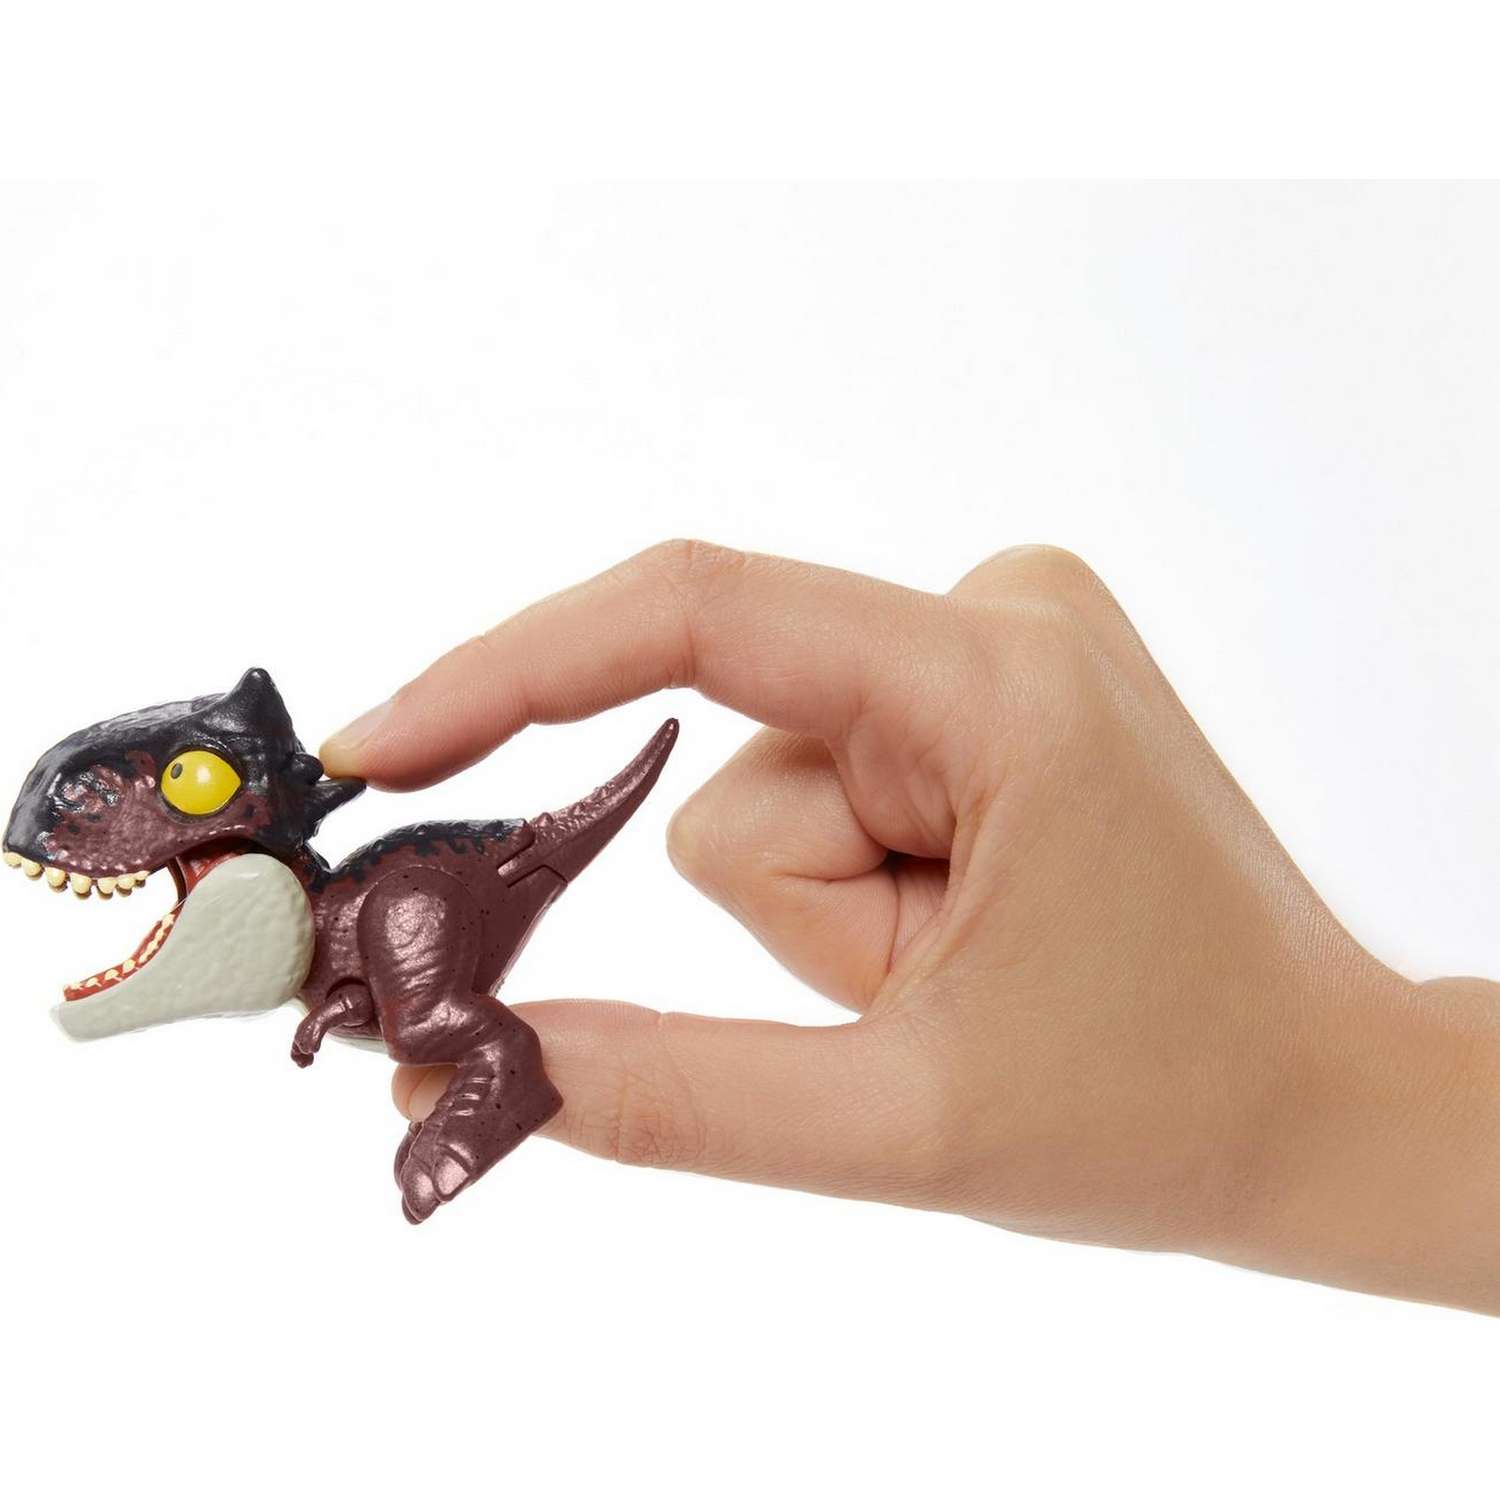 Фигурка Jurassic World Цепляющийся мини-динозаврик Карнотавр Торо GMT89 - фото 5